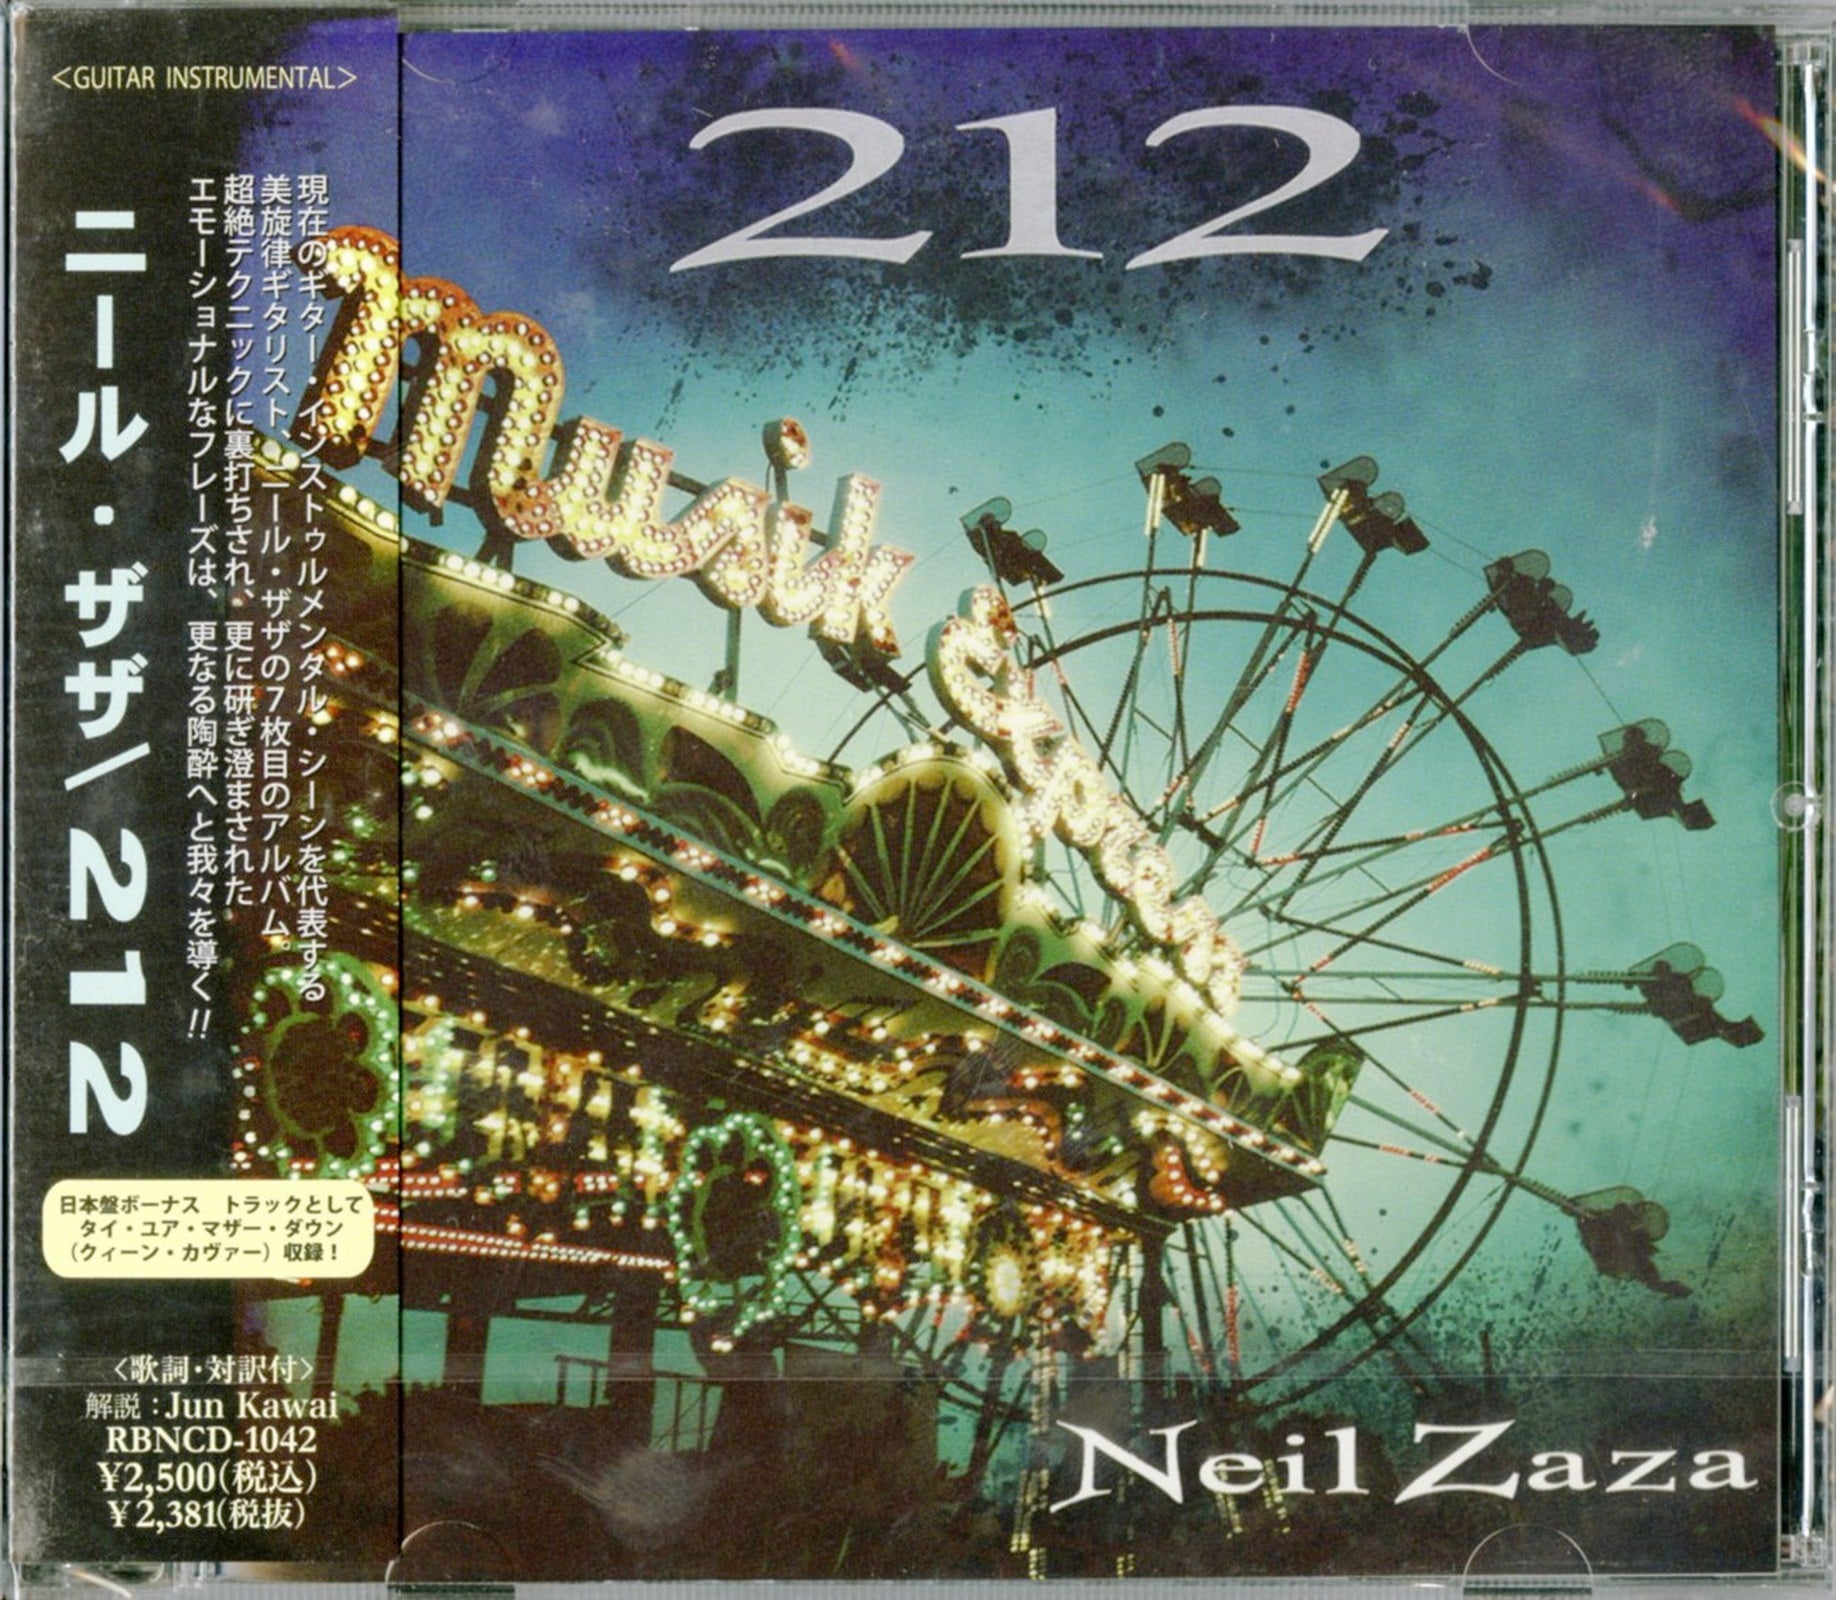 Neil Zaza -212 - Japan CD – CDs Vinyl Japan Store CD, Hard